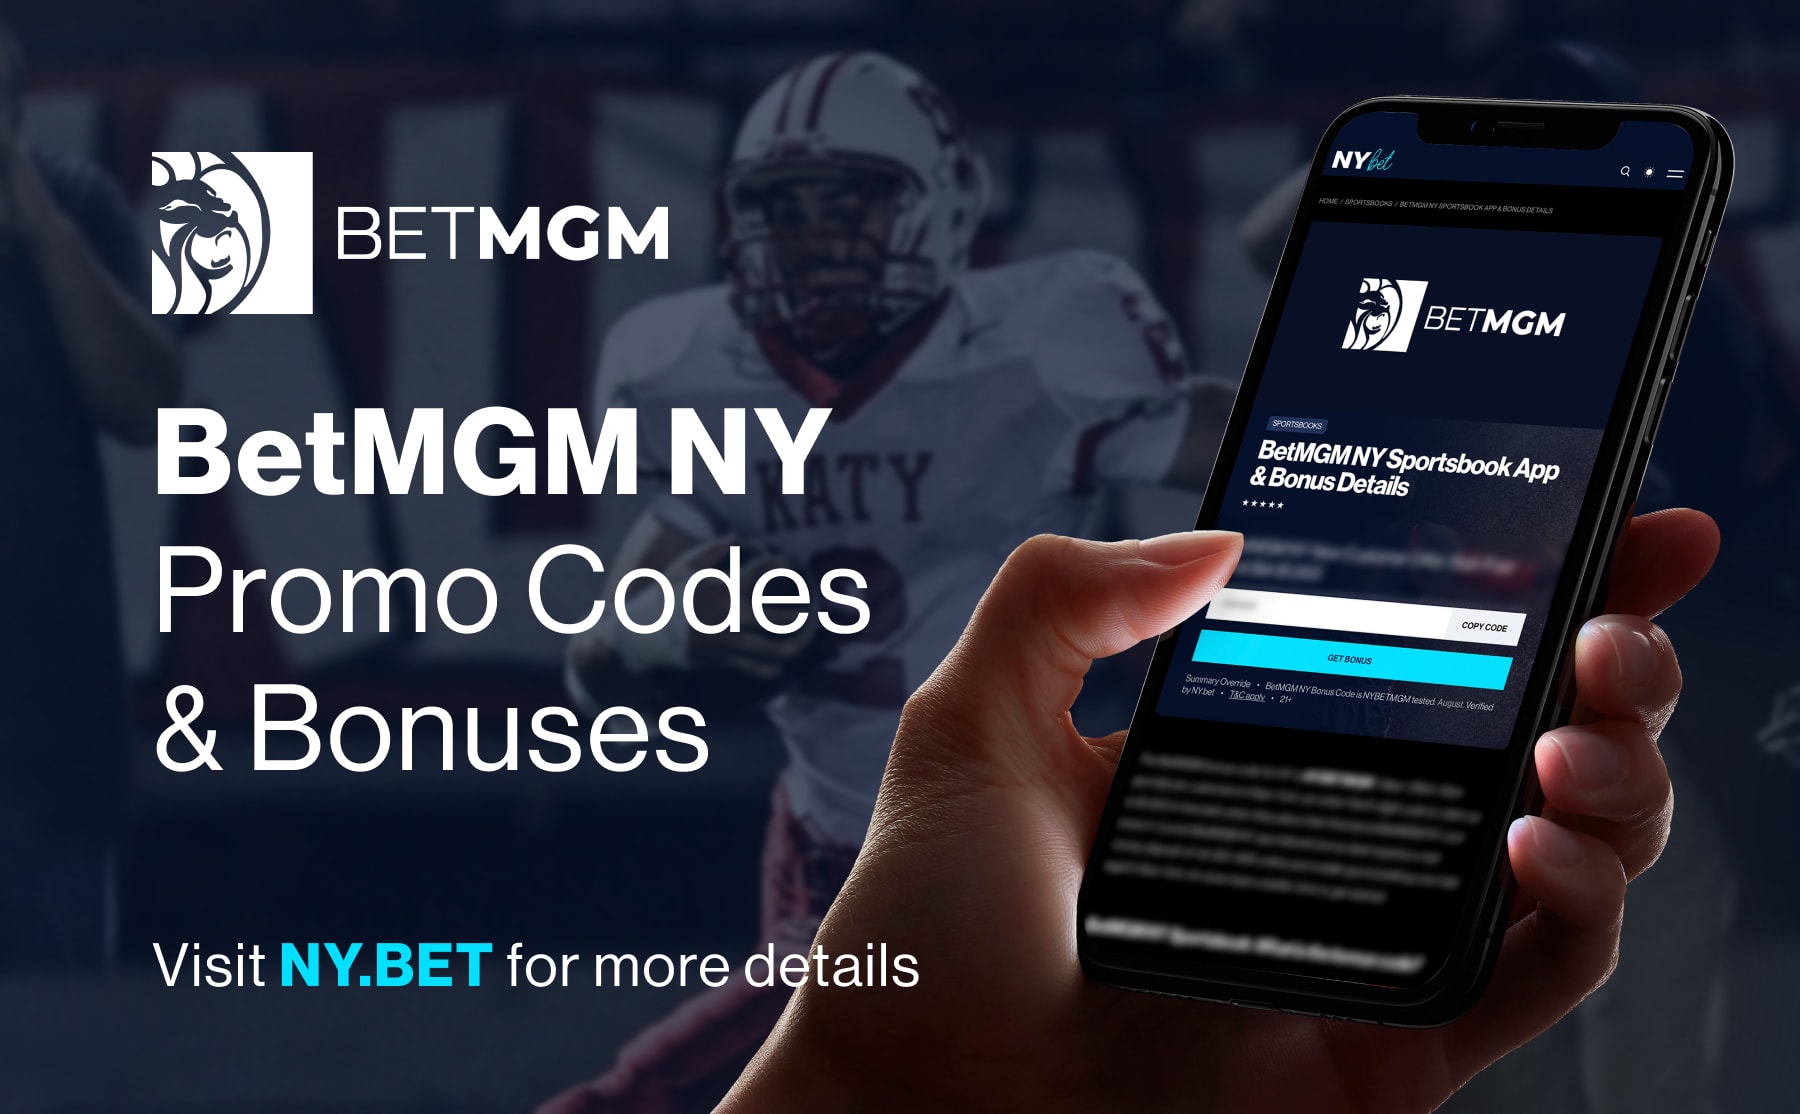 BetMGM Bonus Code NYP1600, 20% Deposit Match up to $1,600